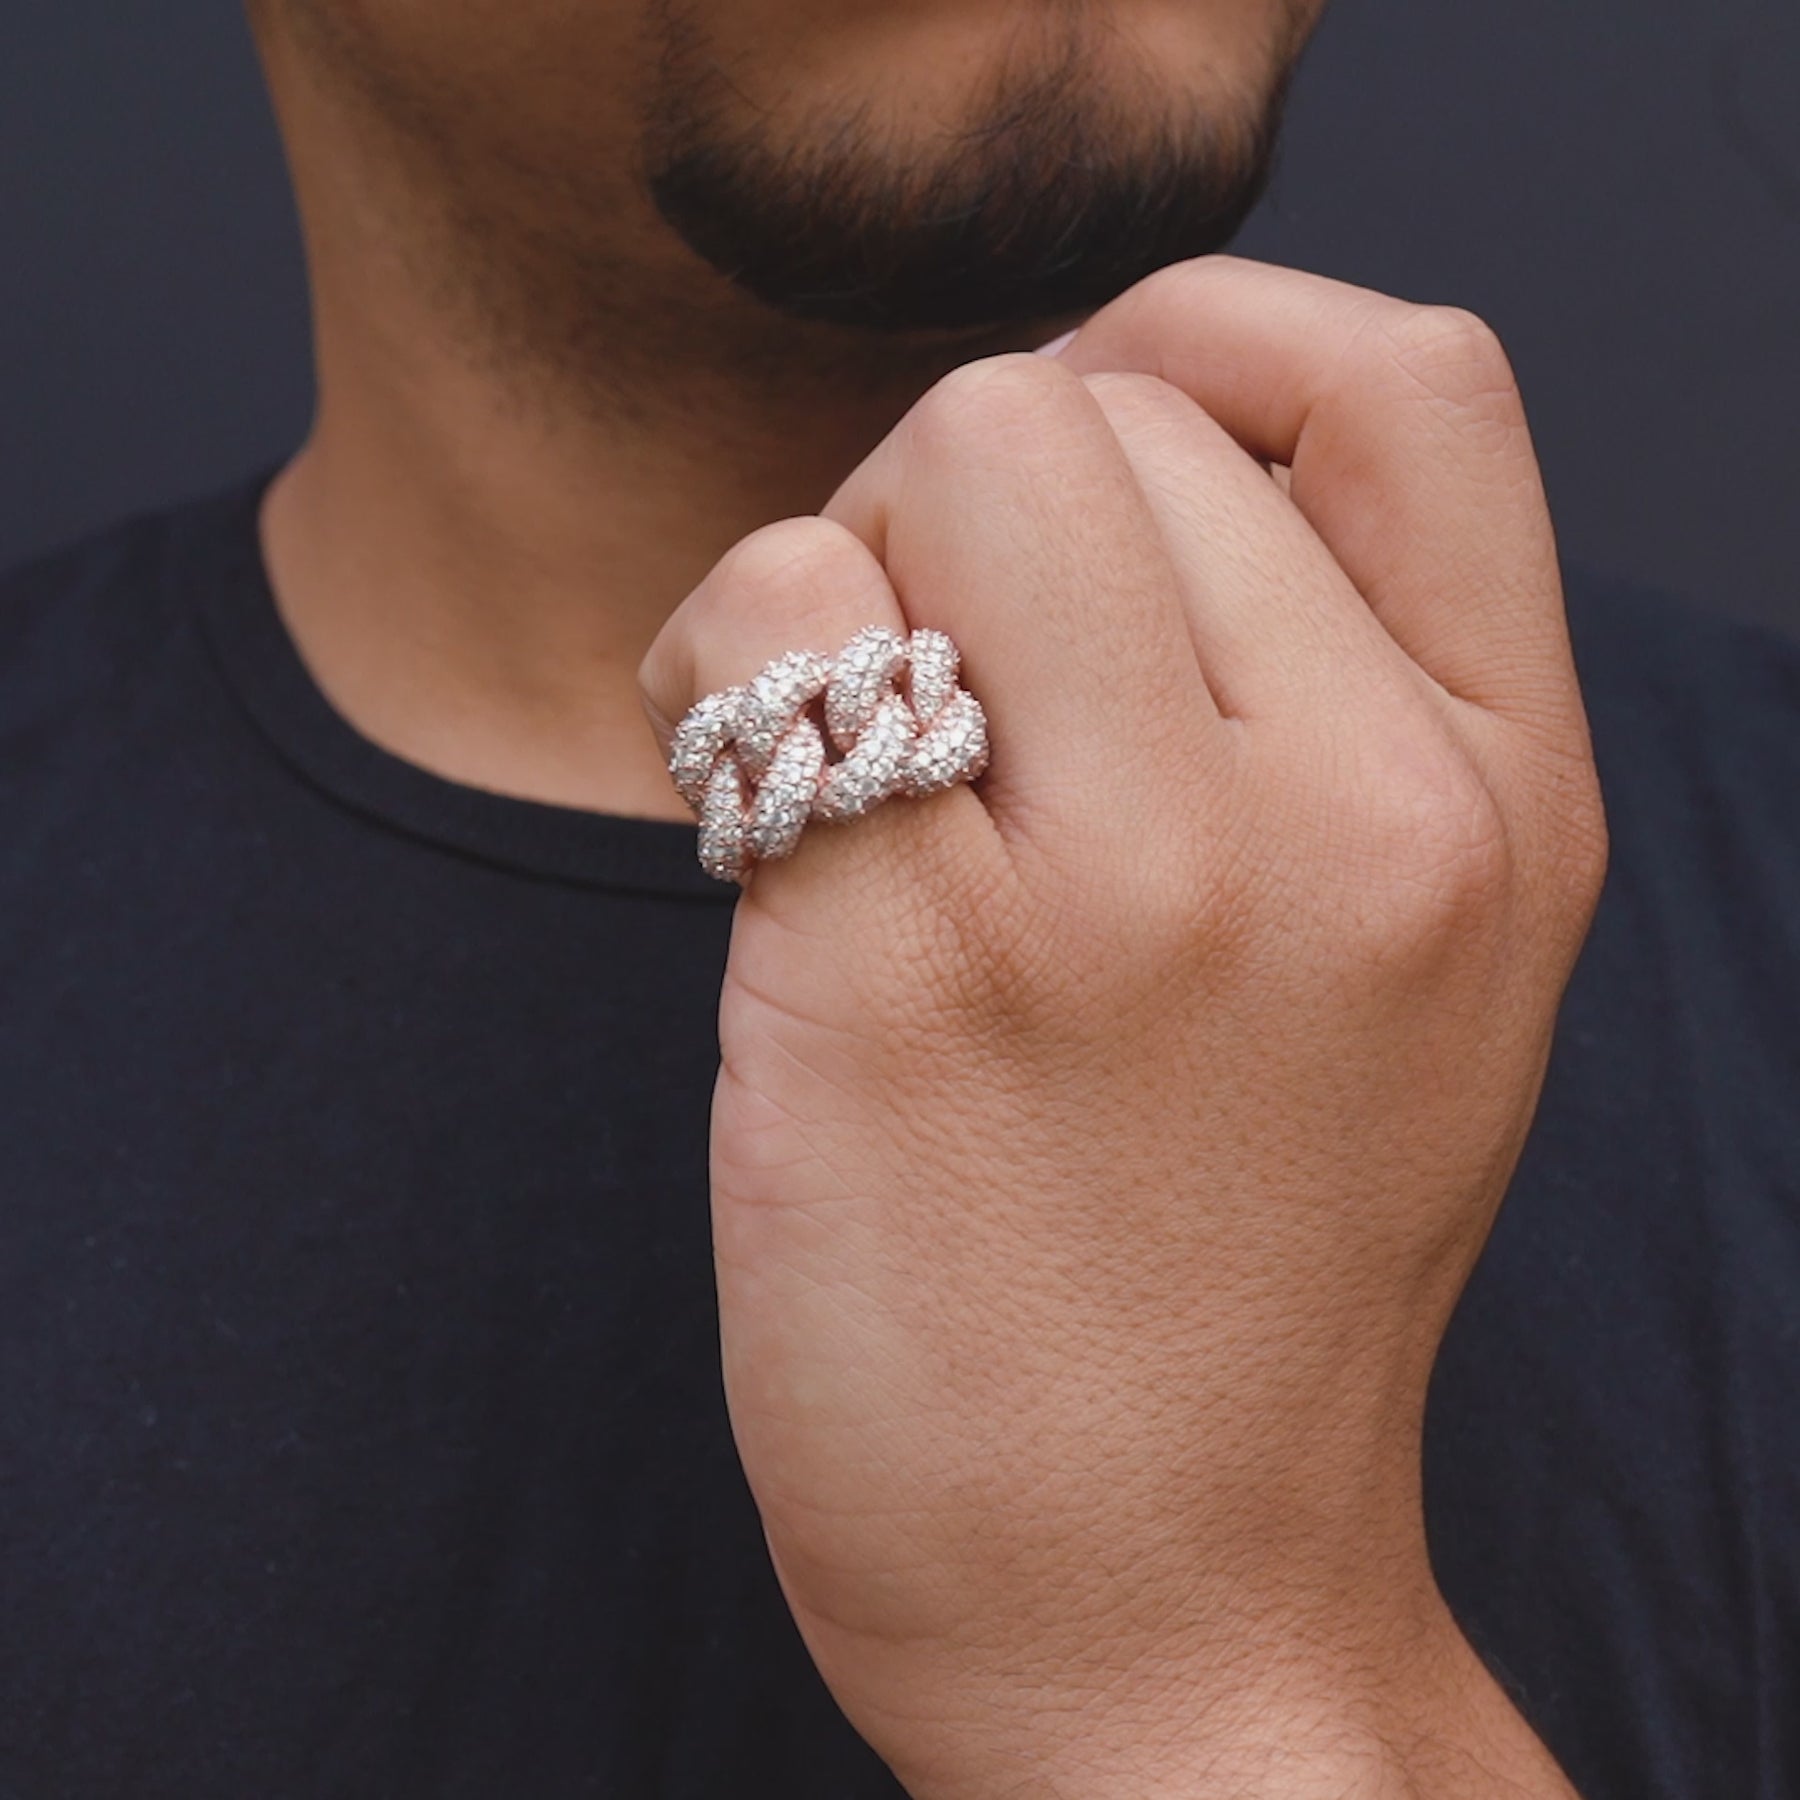 Where can i sell my custom cuban diamond ring? : r/Diamonds